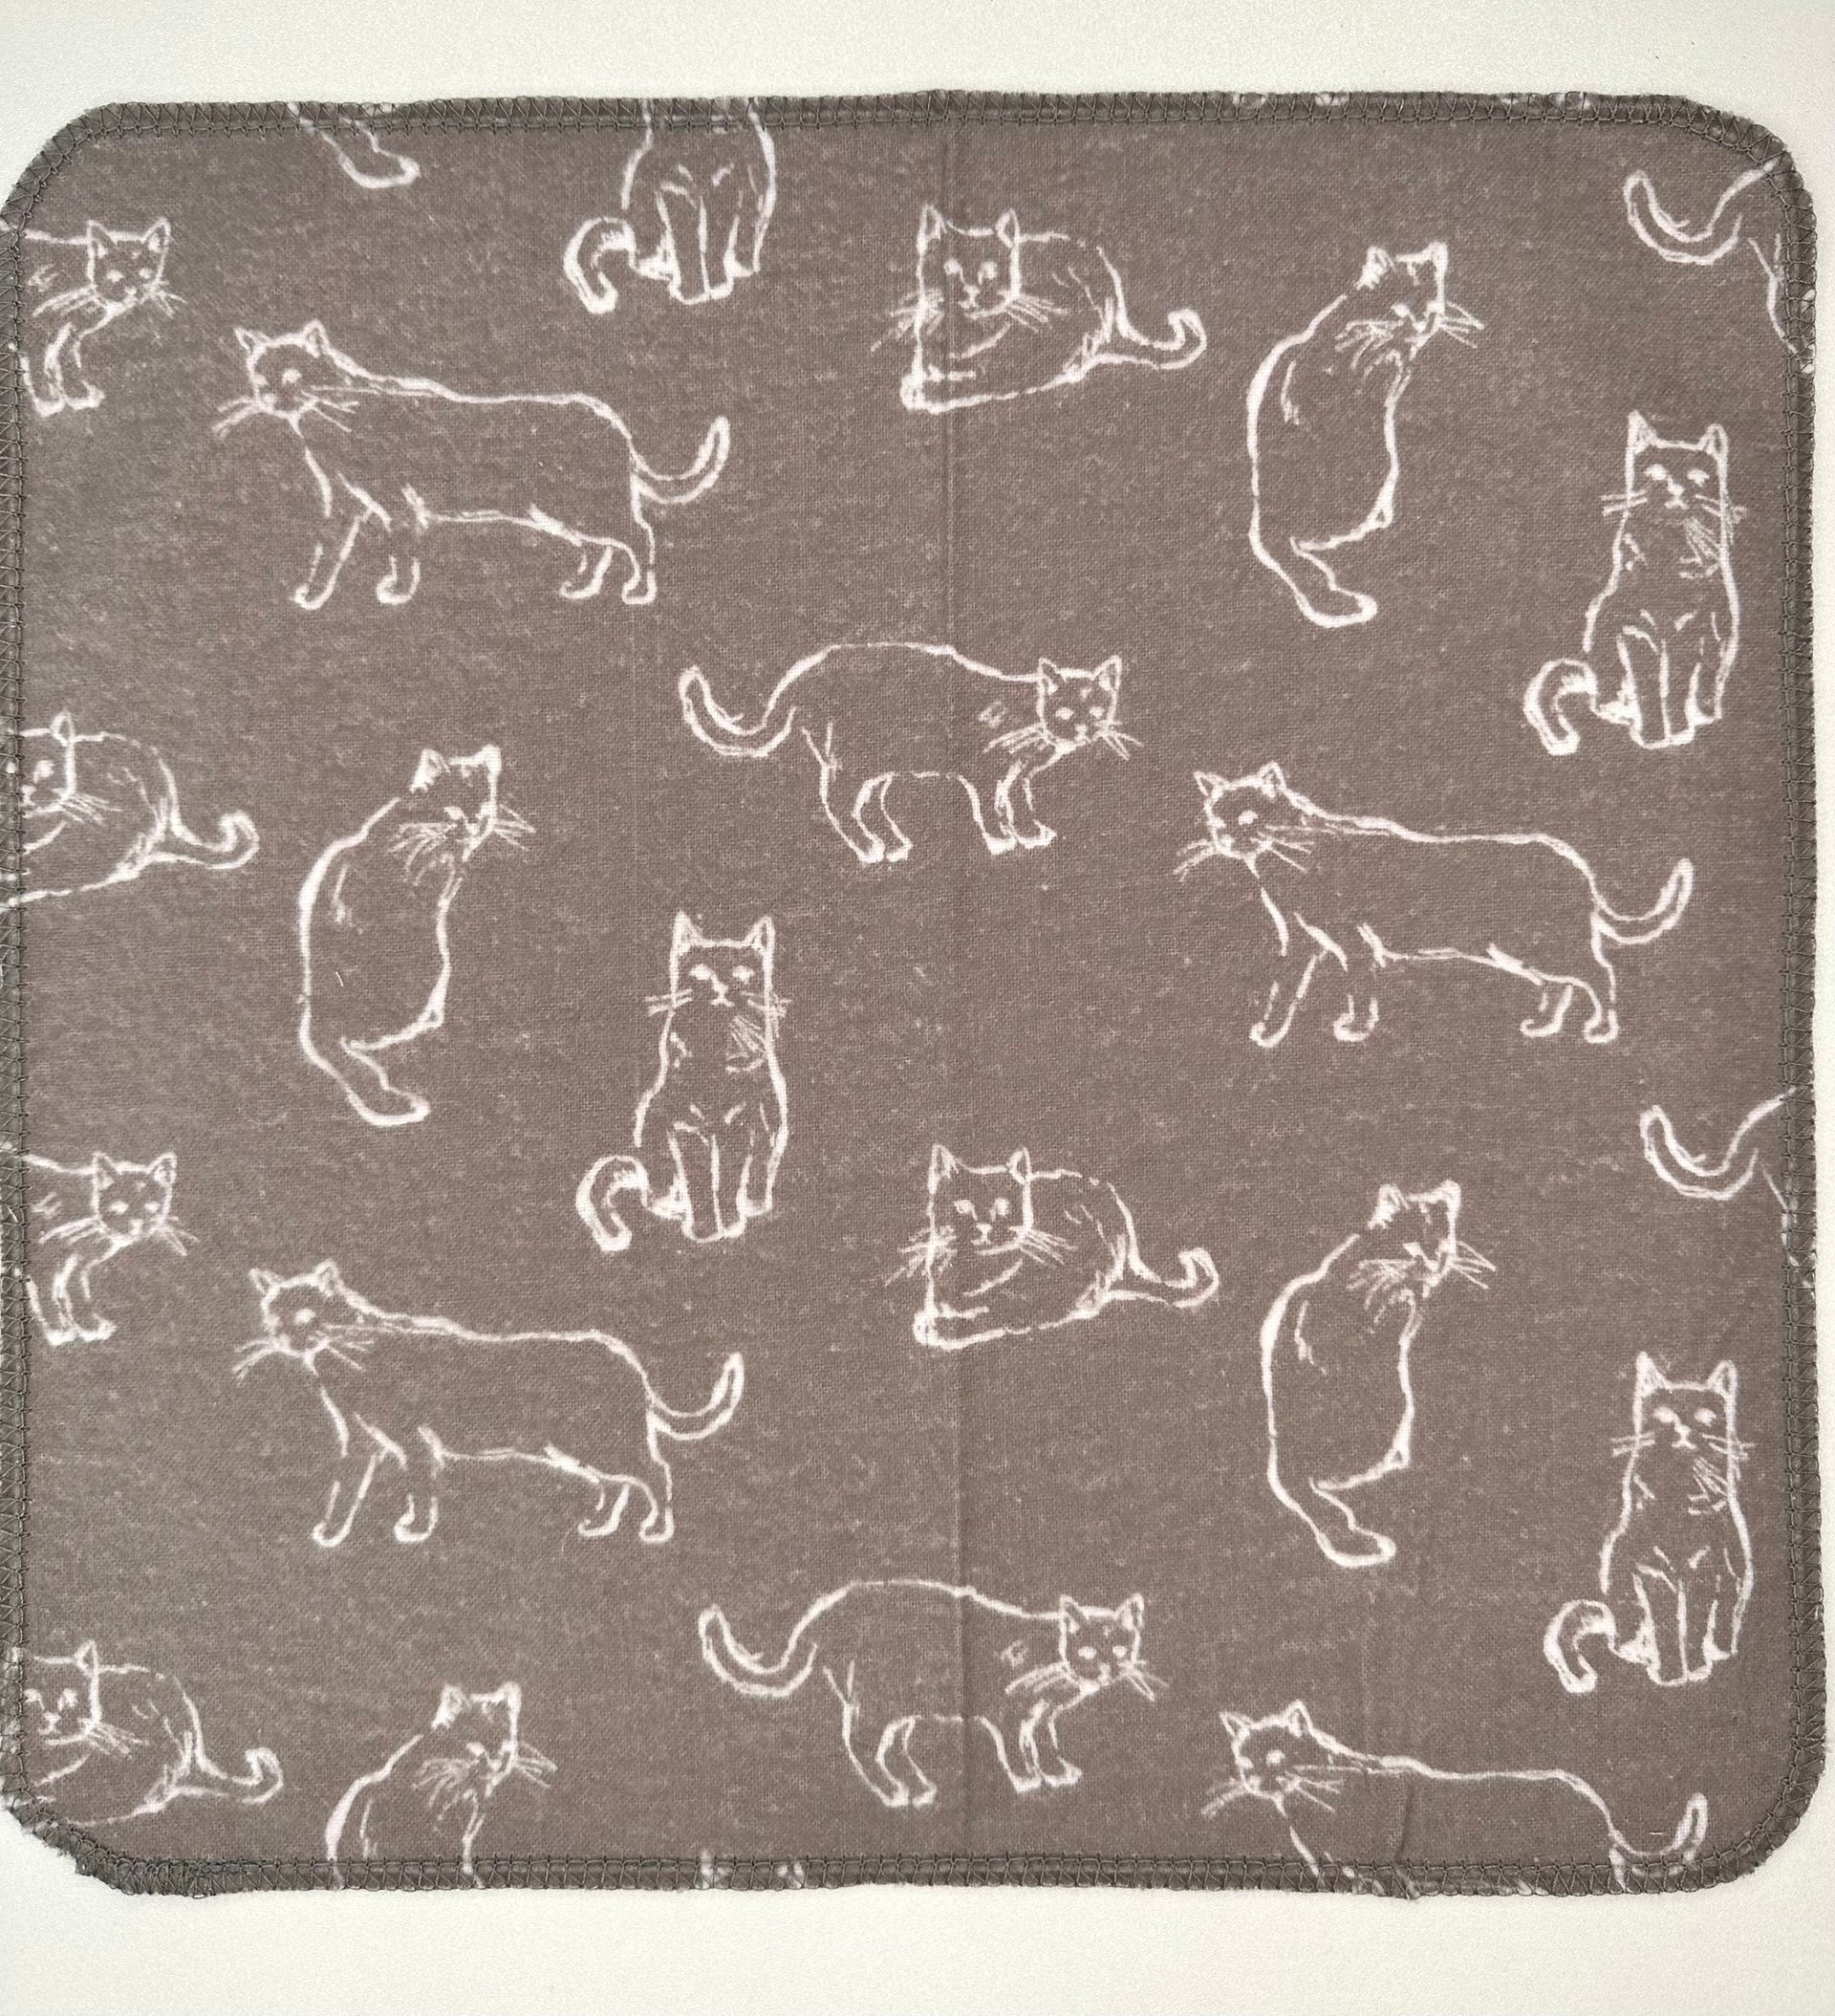 Cat Trio Paperless Towels || Unpaper Towels || Zero Waste Kitchen 12x12 Sheets